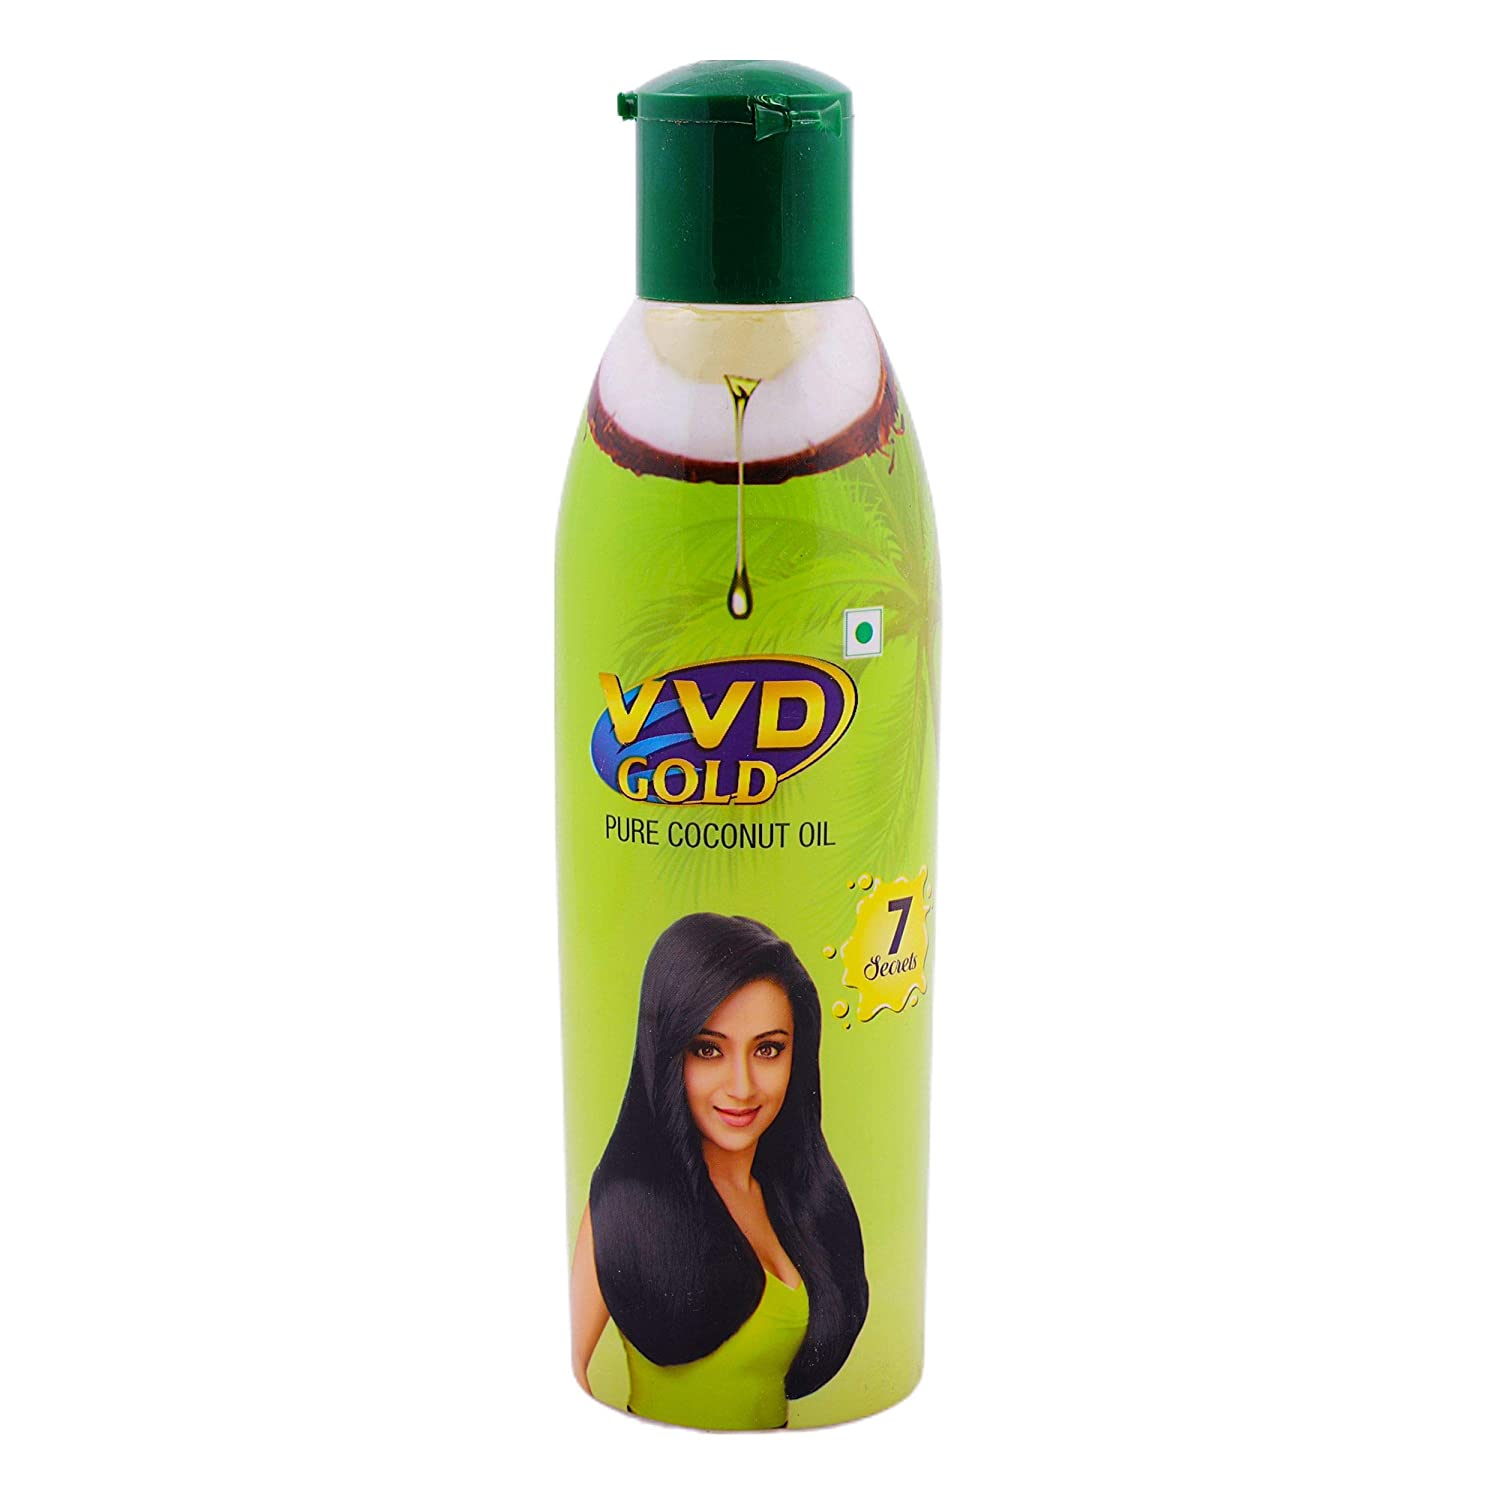 Buy Vvd Gold Pure Coconut Oil, 175 ml Online